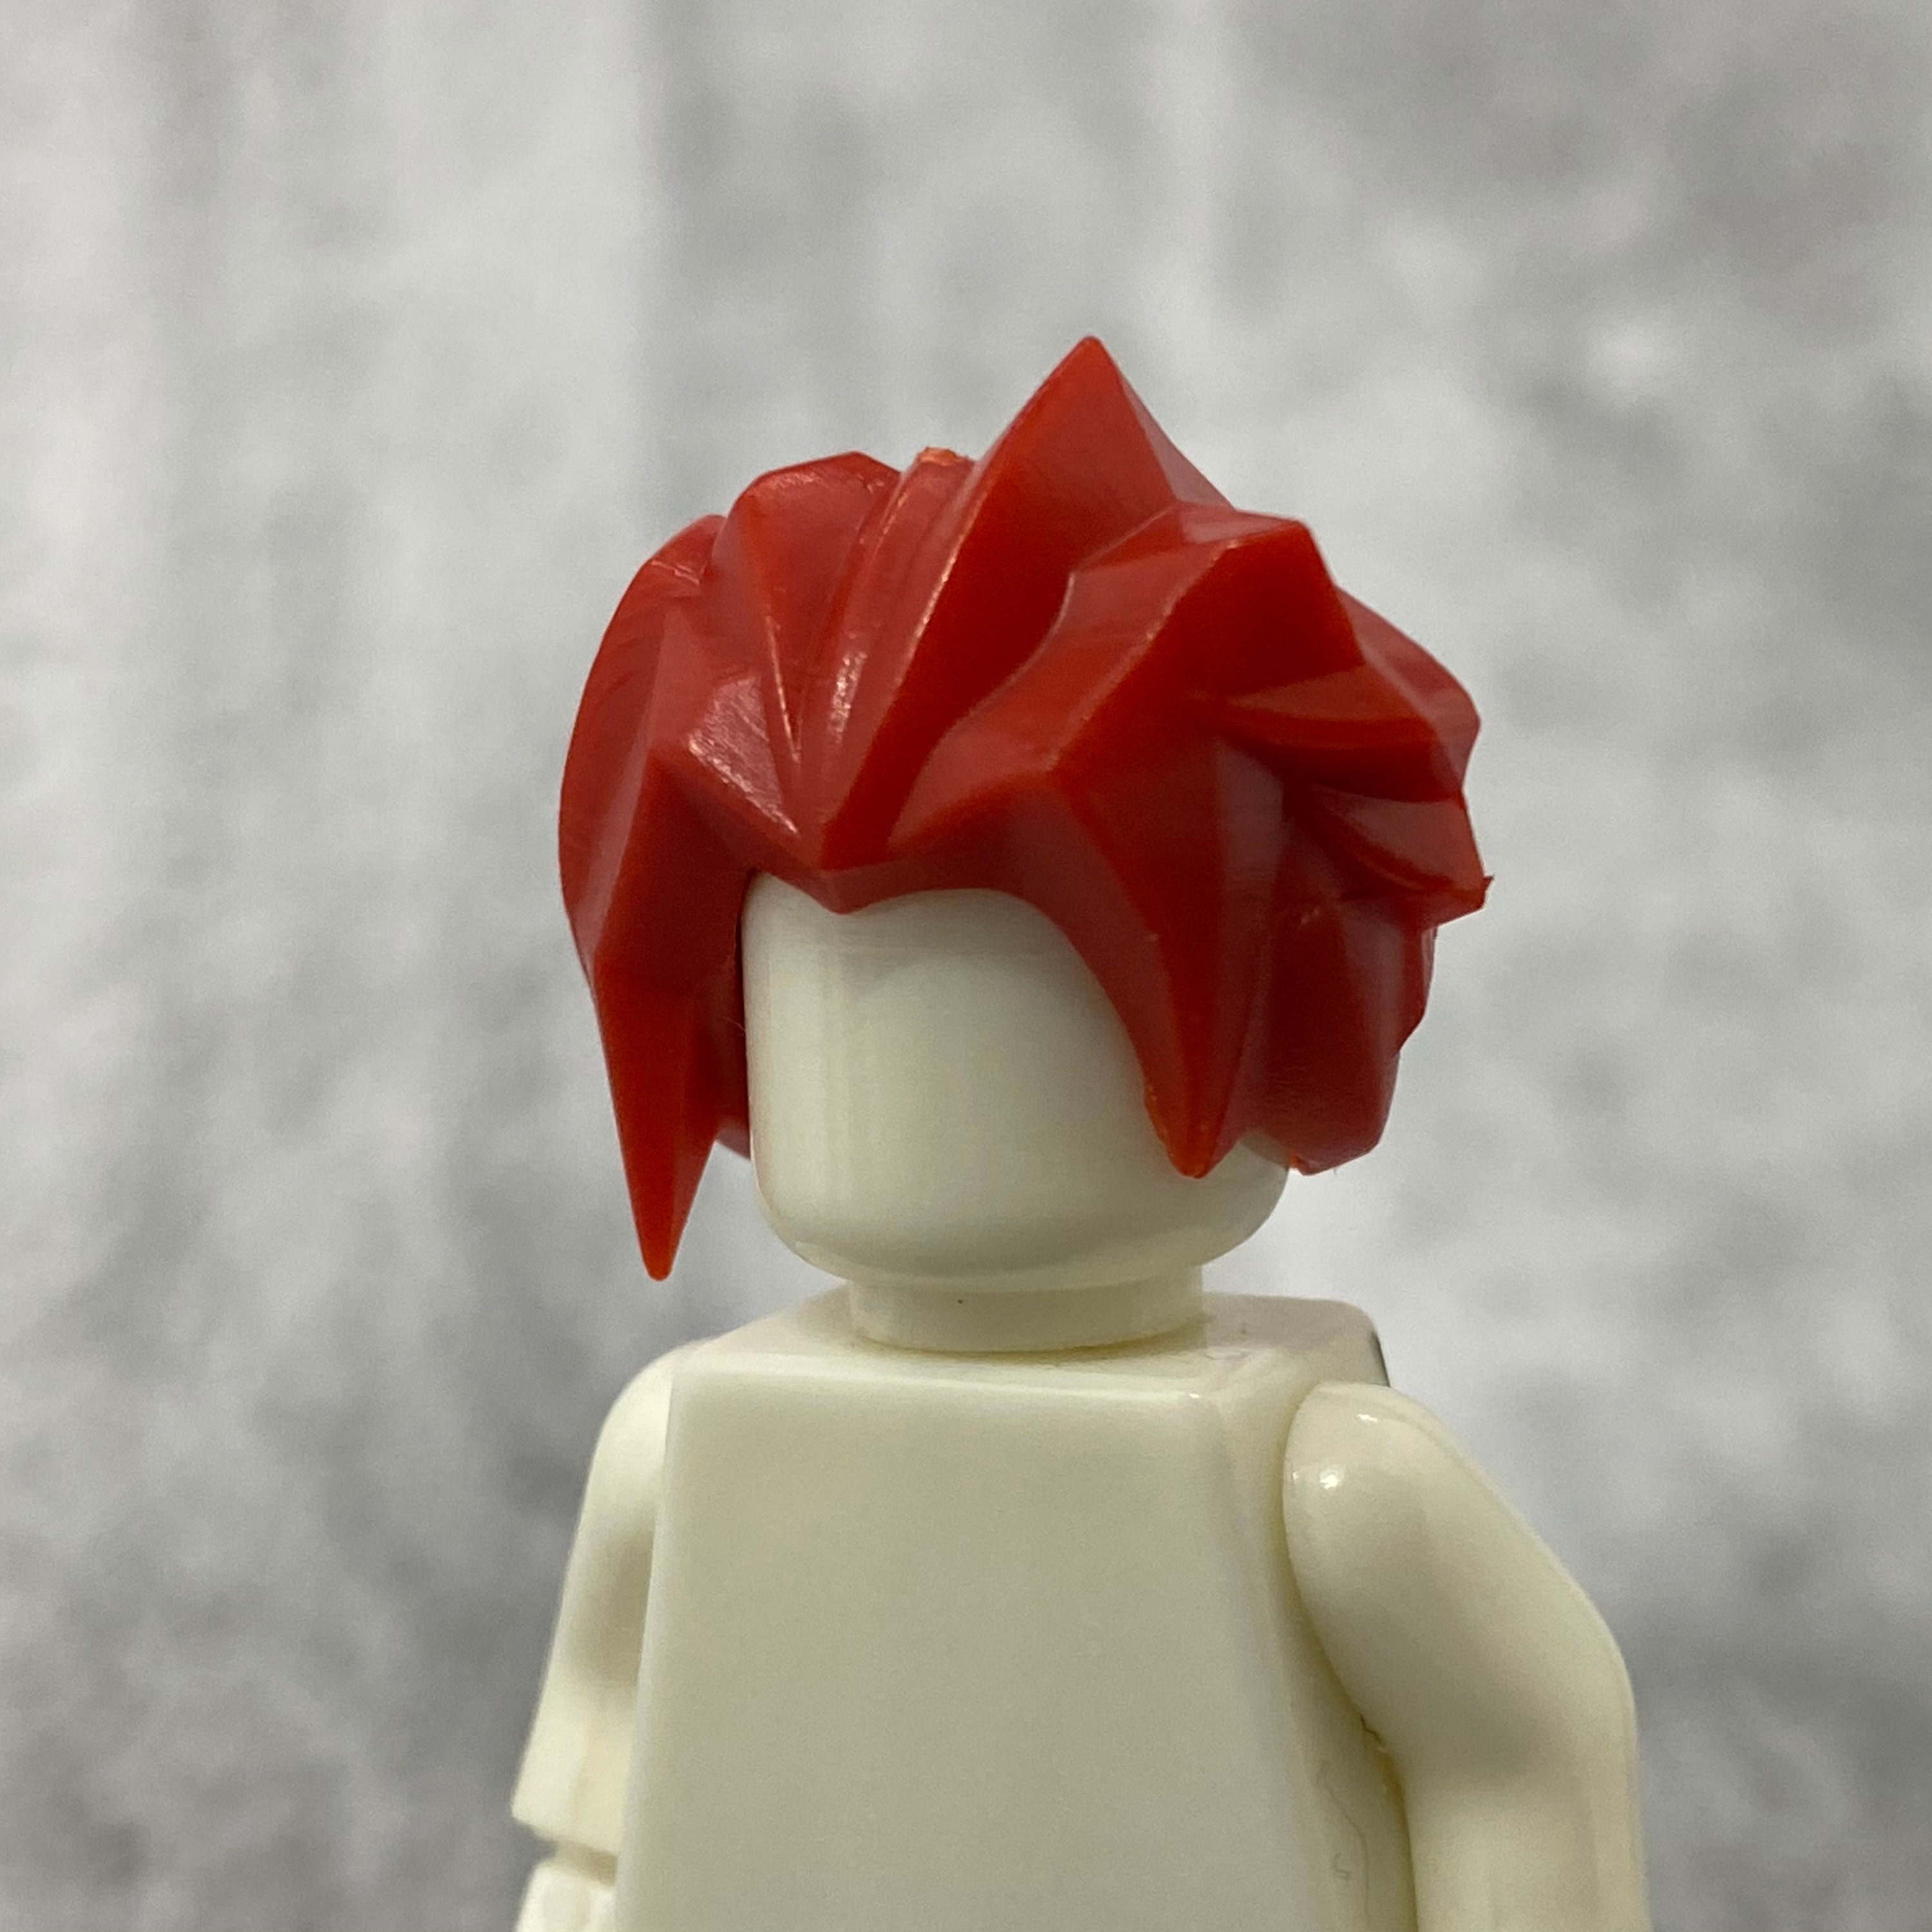 Hair Model Accessories | Building Blocks Toys | Anime Action Figure | Lego  Hair Figures - Blocks - Aliexpress